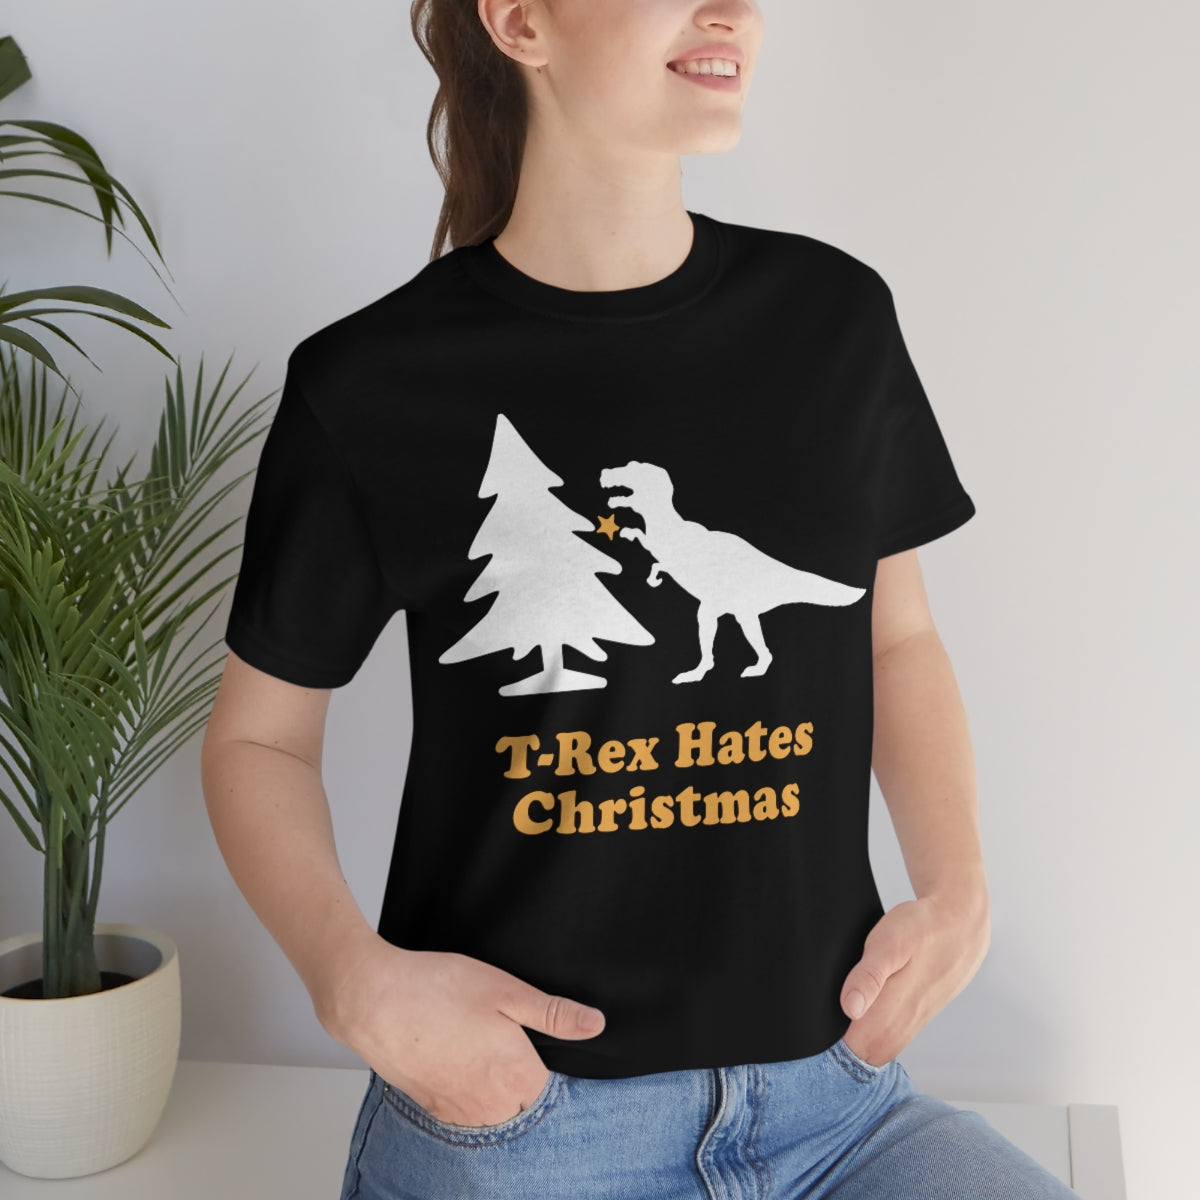 T-Rex Hates Christmas - Unisex tee